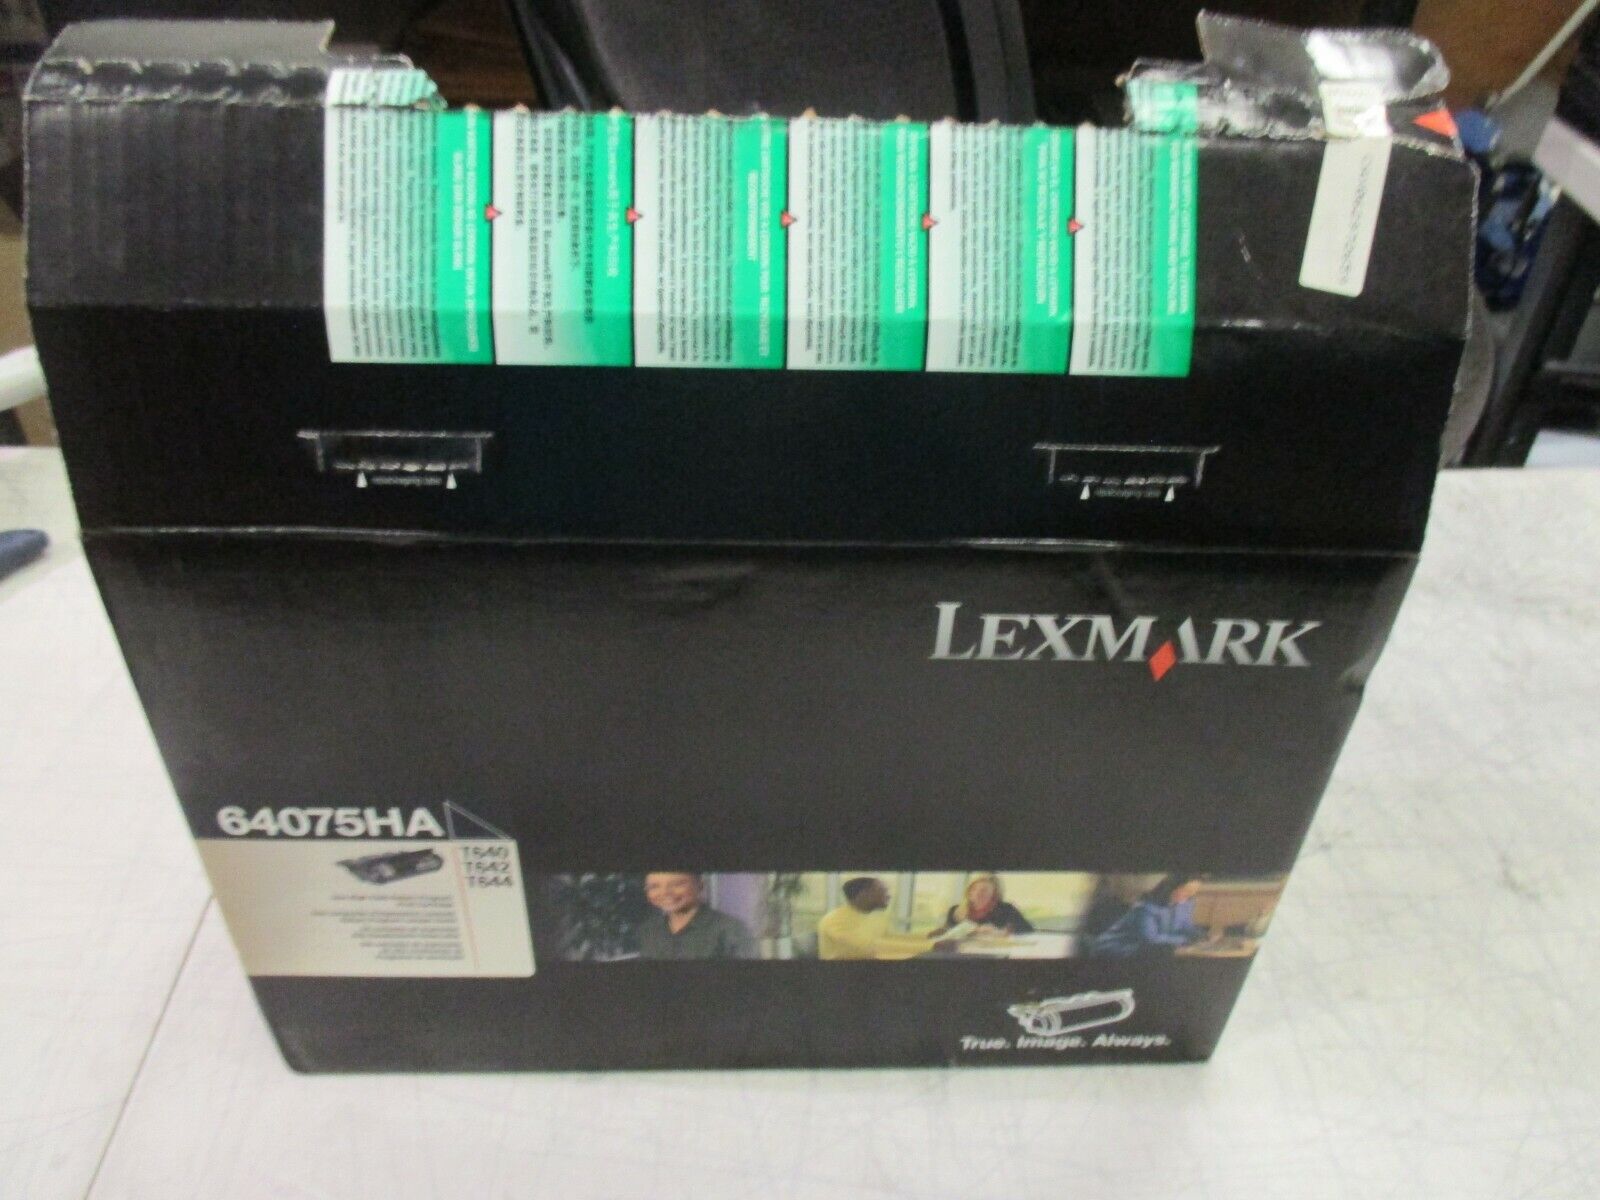 Lexmark 64075HA Toner Cartridge Black High Yield Genuine Brand New Open 